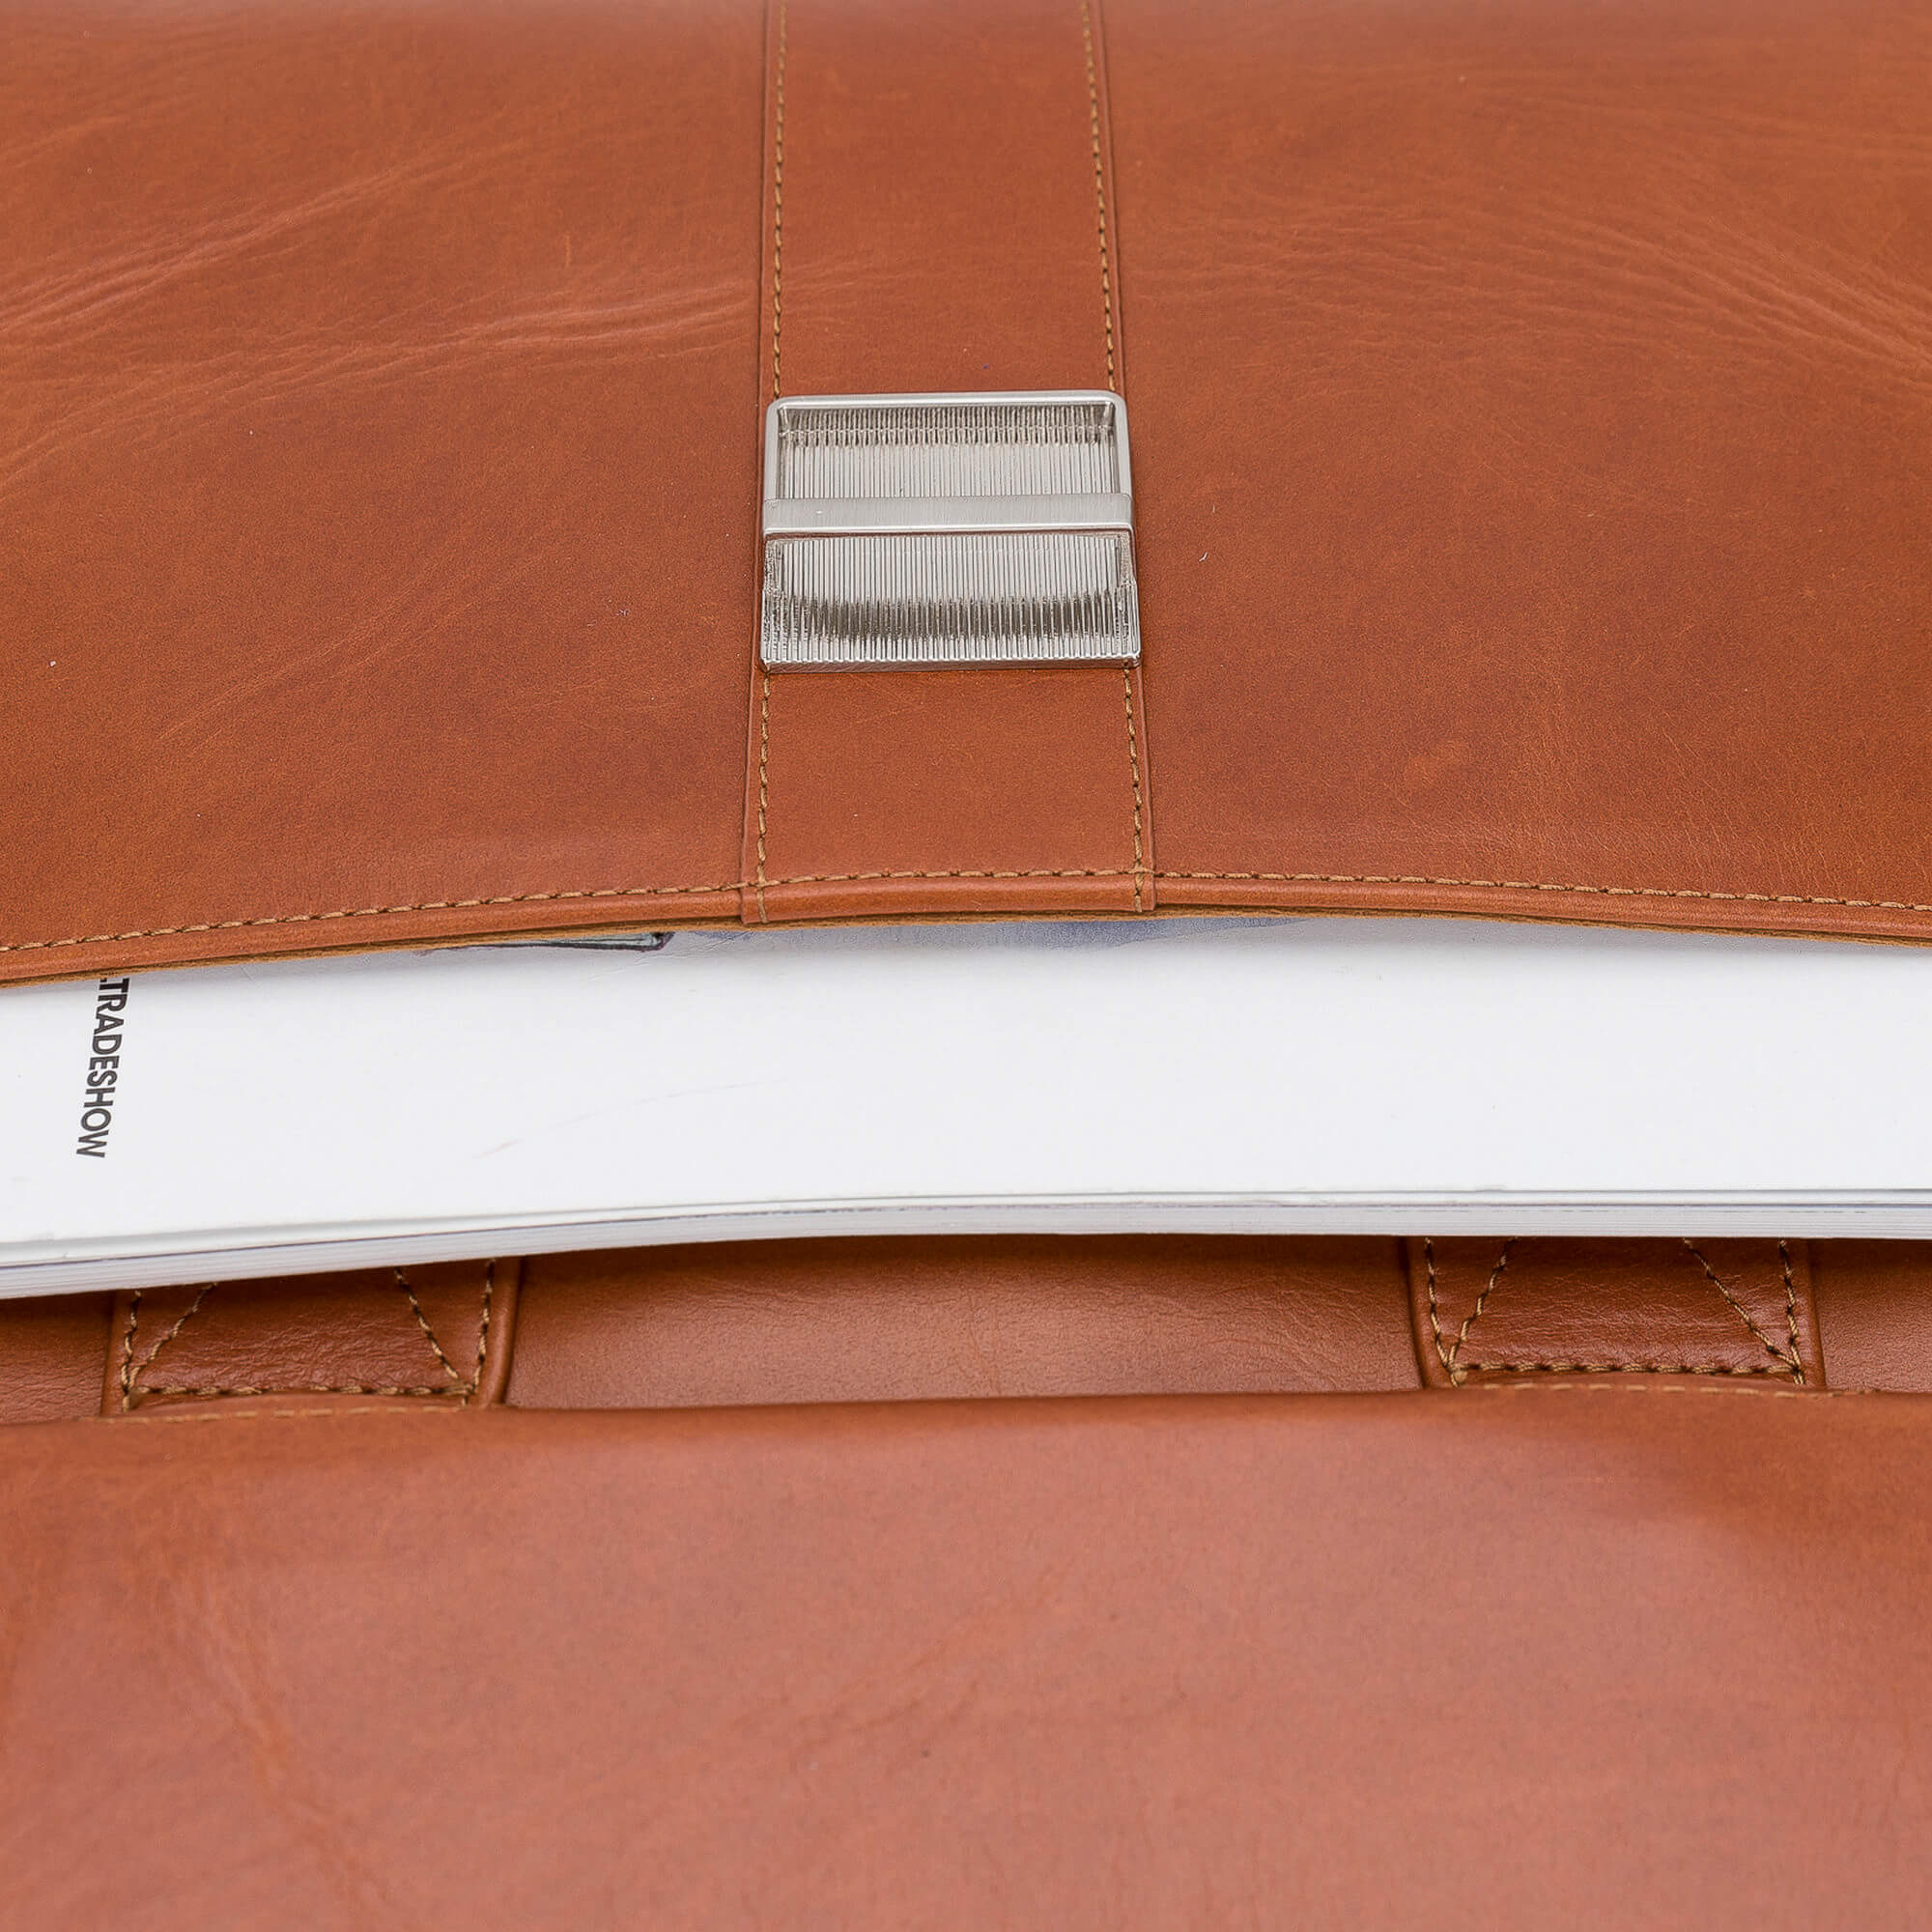 Wizard Briefcase Leather Bag - Laptop Bag